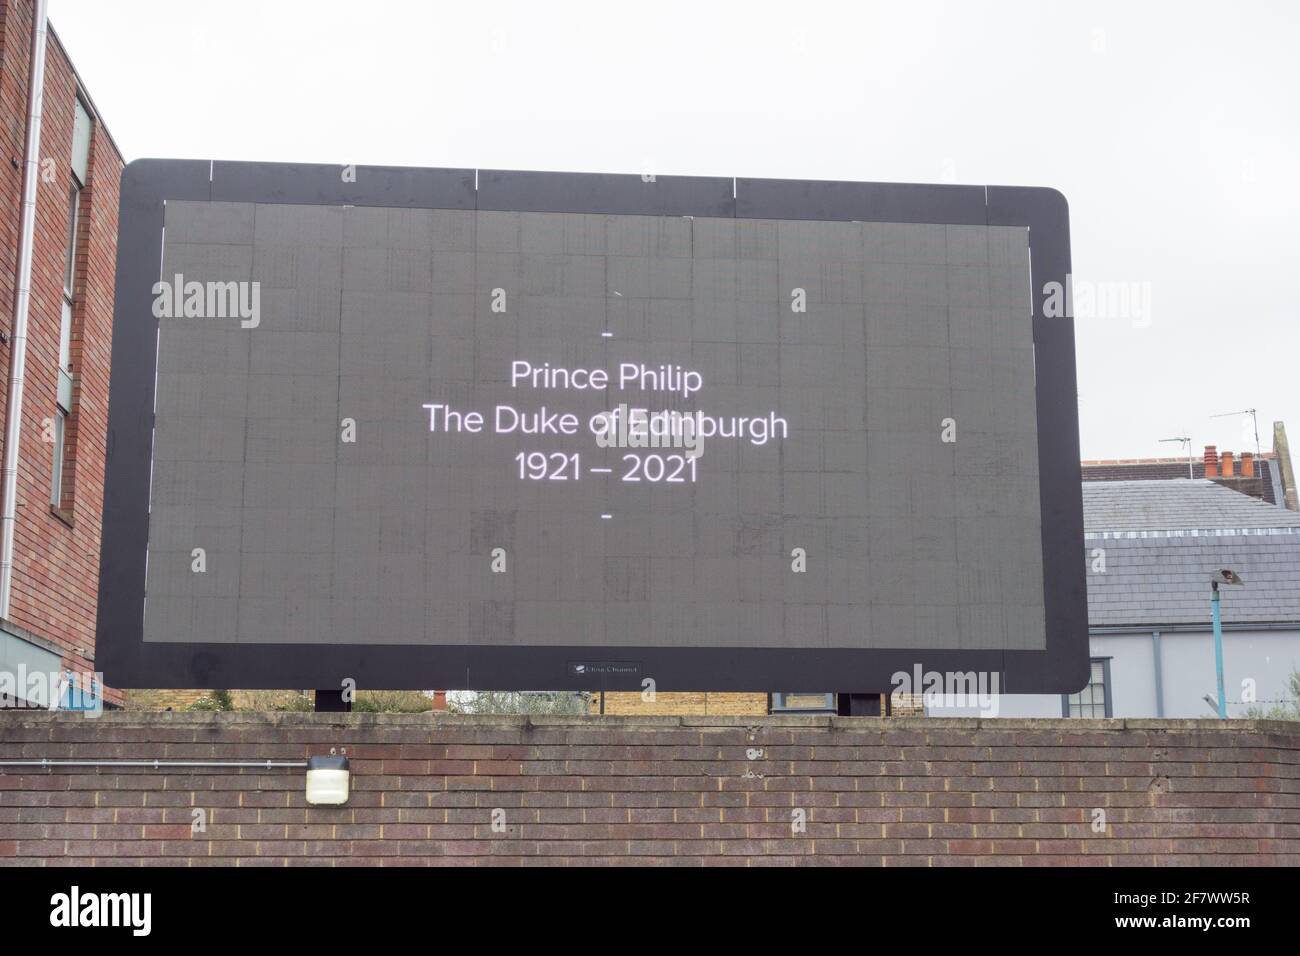 Prince Philip, Duke of Edinburgh, 1921-2021, electronic billboard advertising sign, London, U.K. Stock Photo